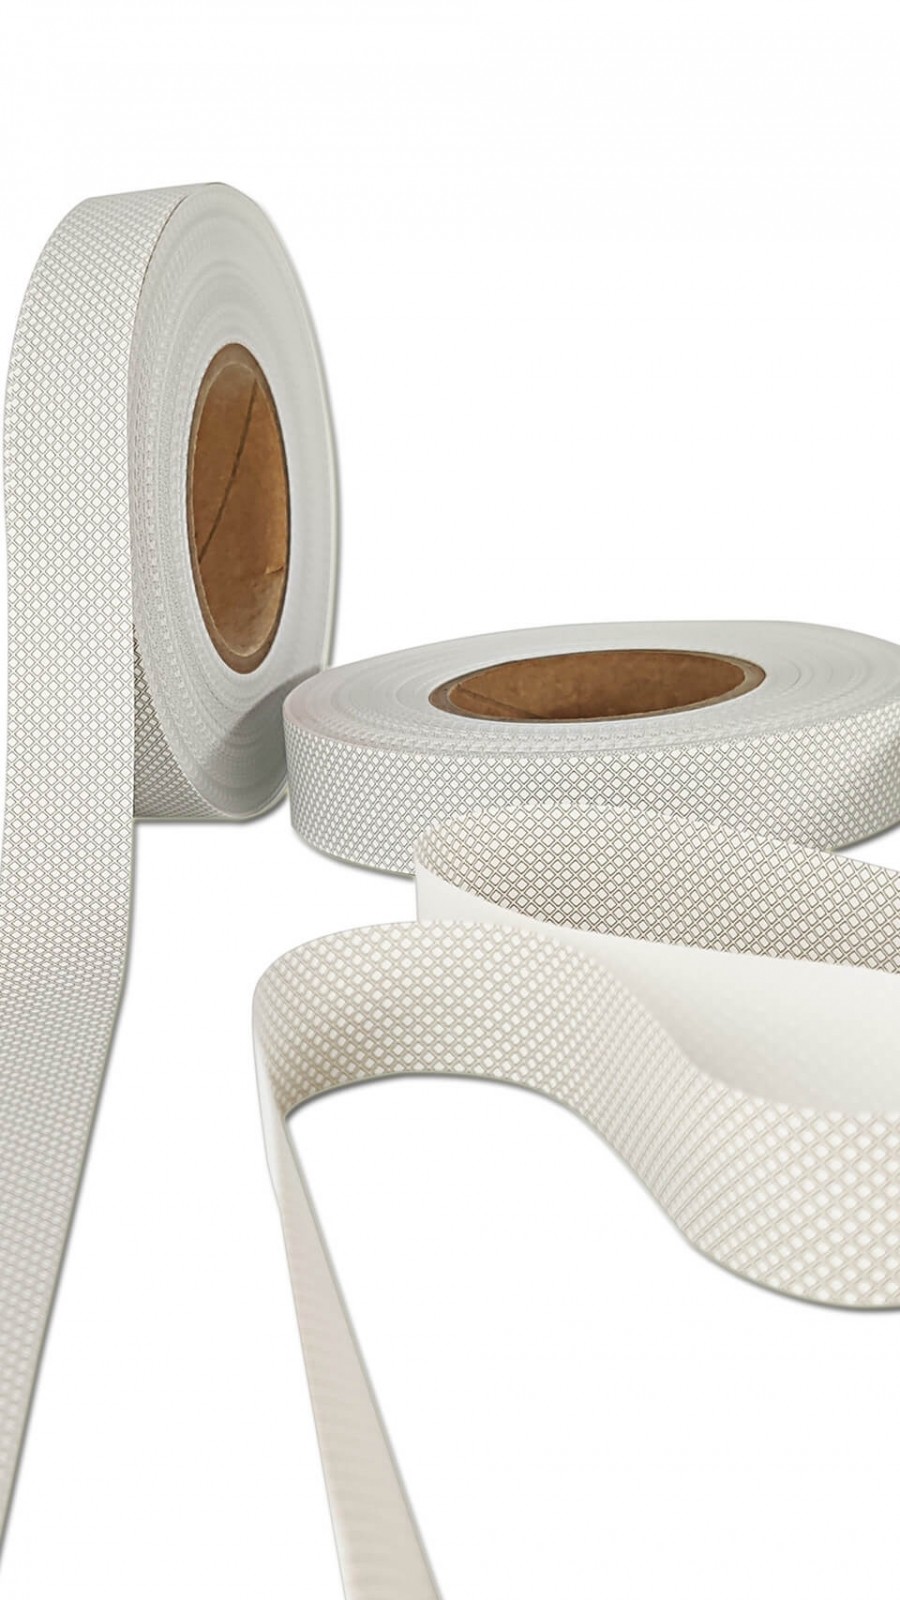 MinMax Printed seam seal tape slider mobile for seaned garment water resistant